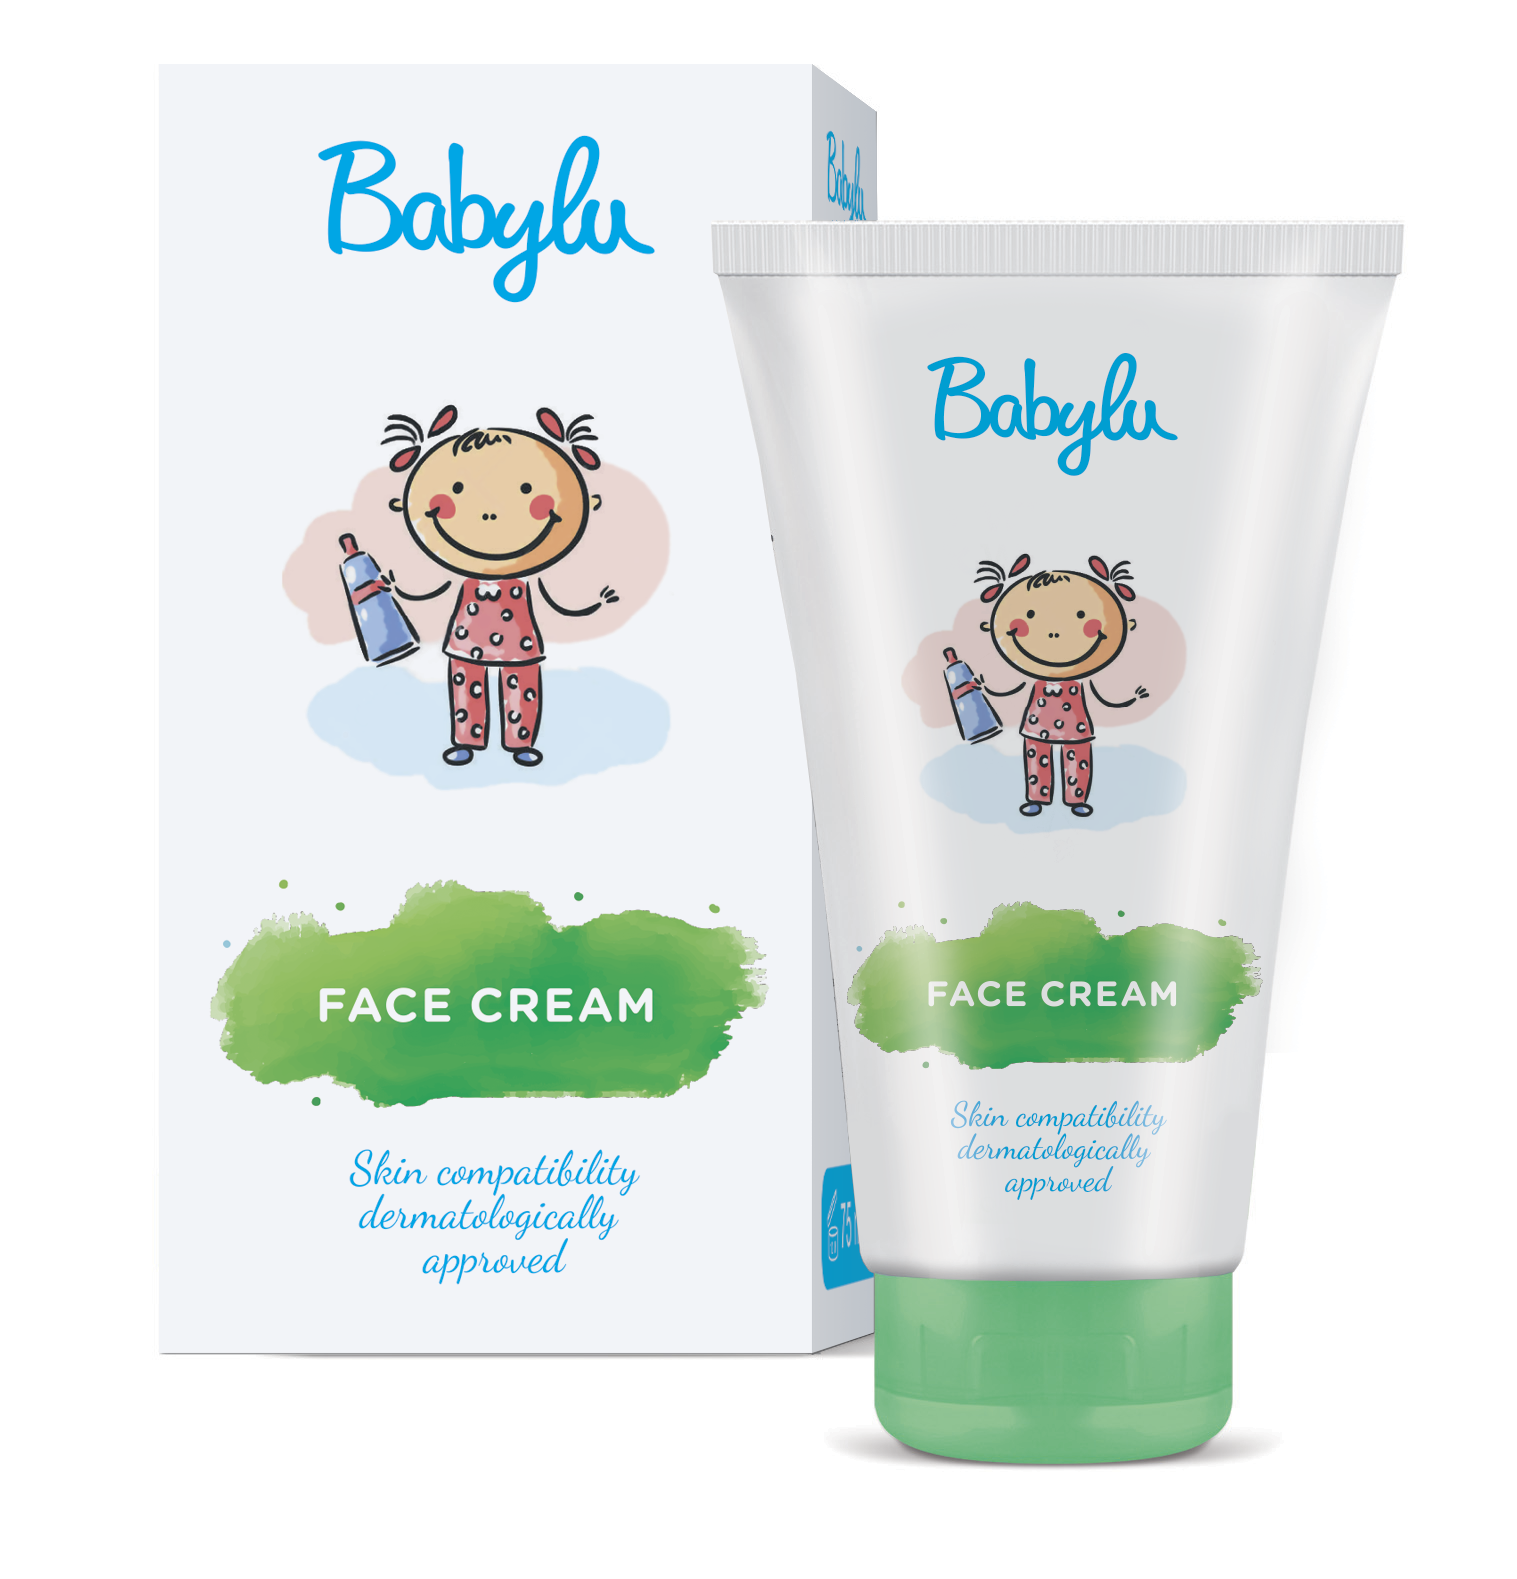 baby face cream containing aloe vera